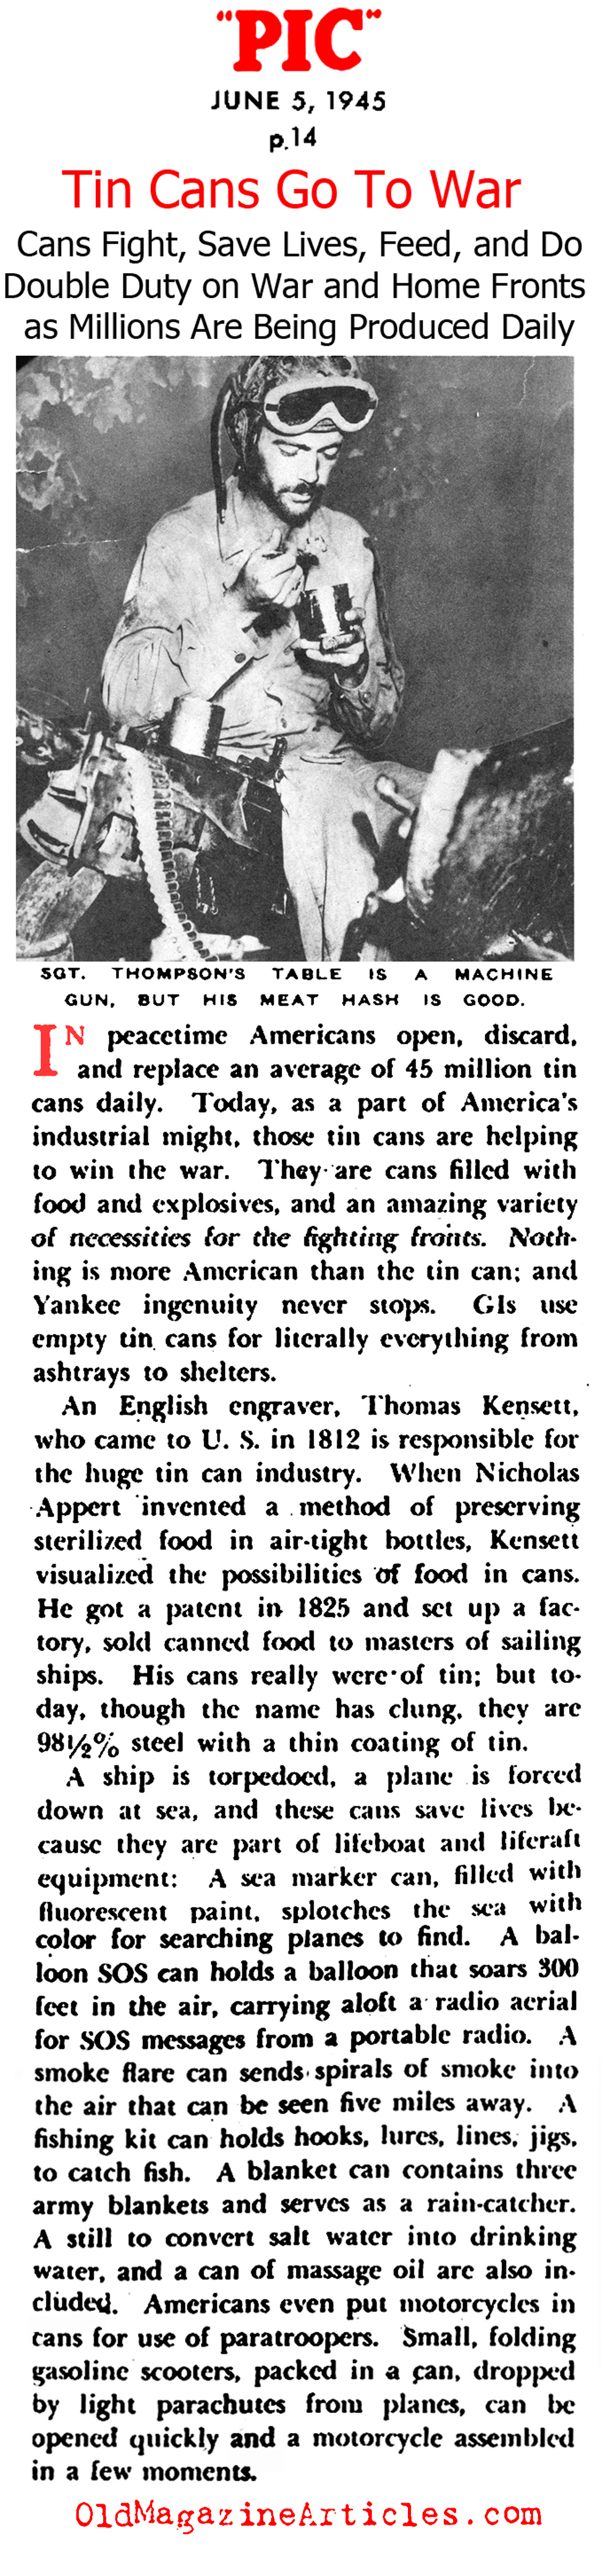 Tin Cans Go to War  (Click Magazine, 1945)